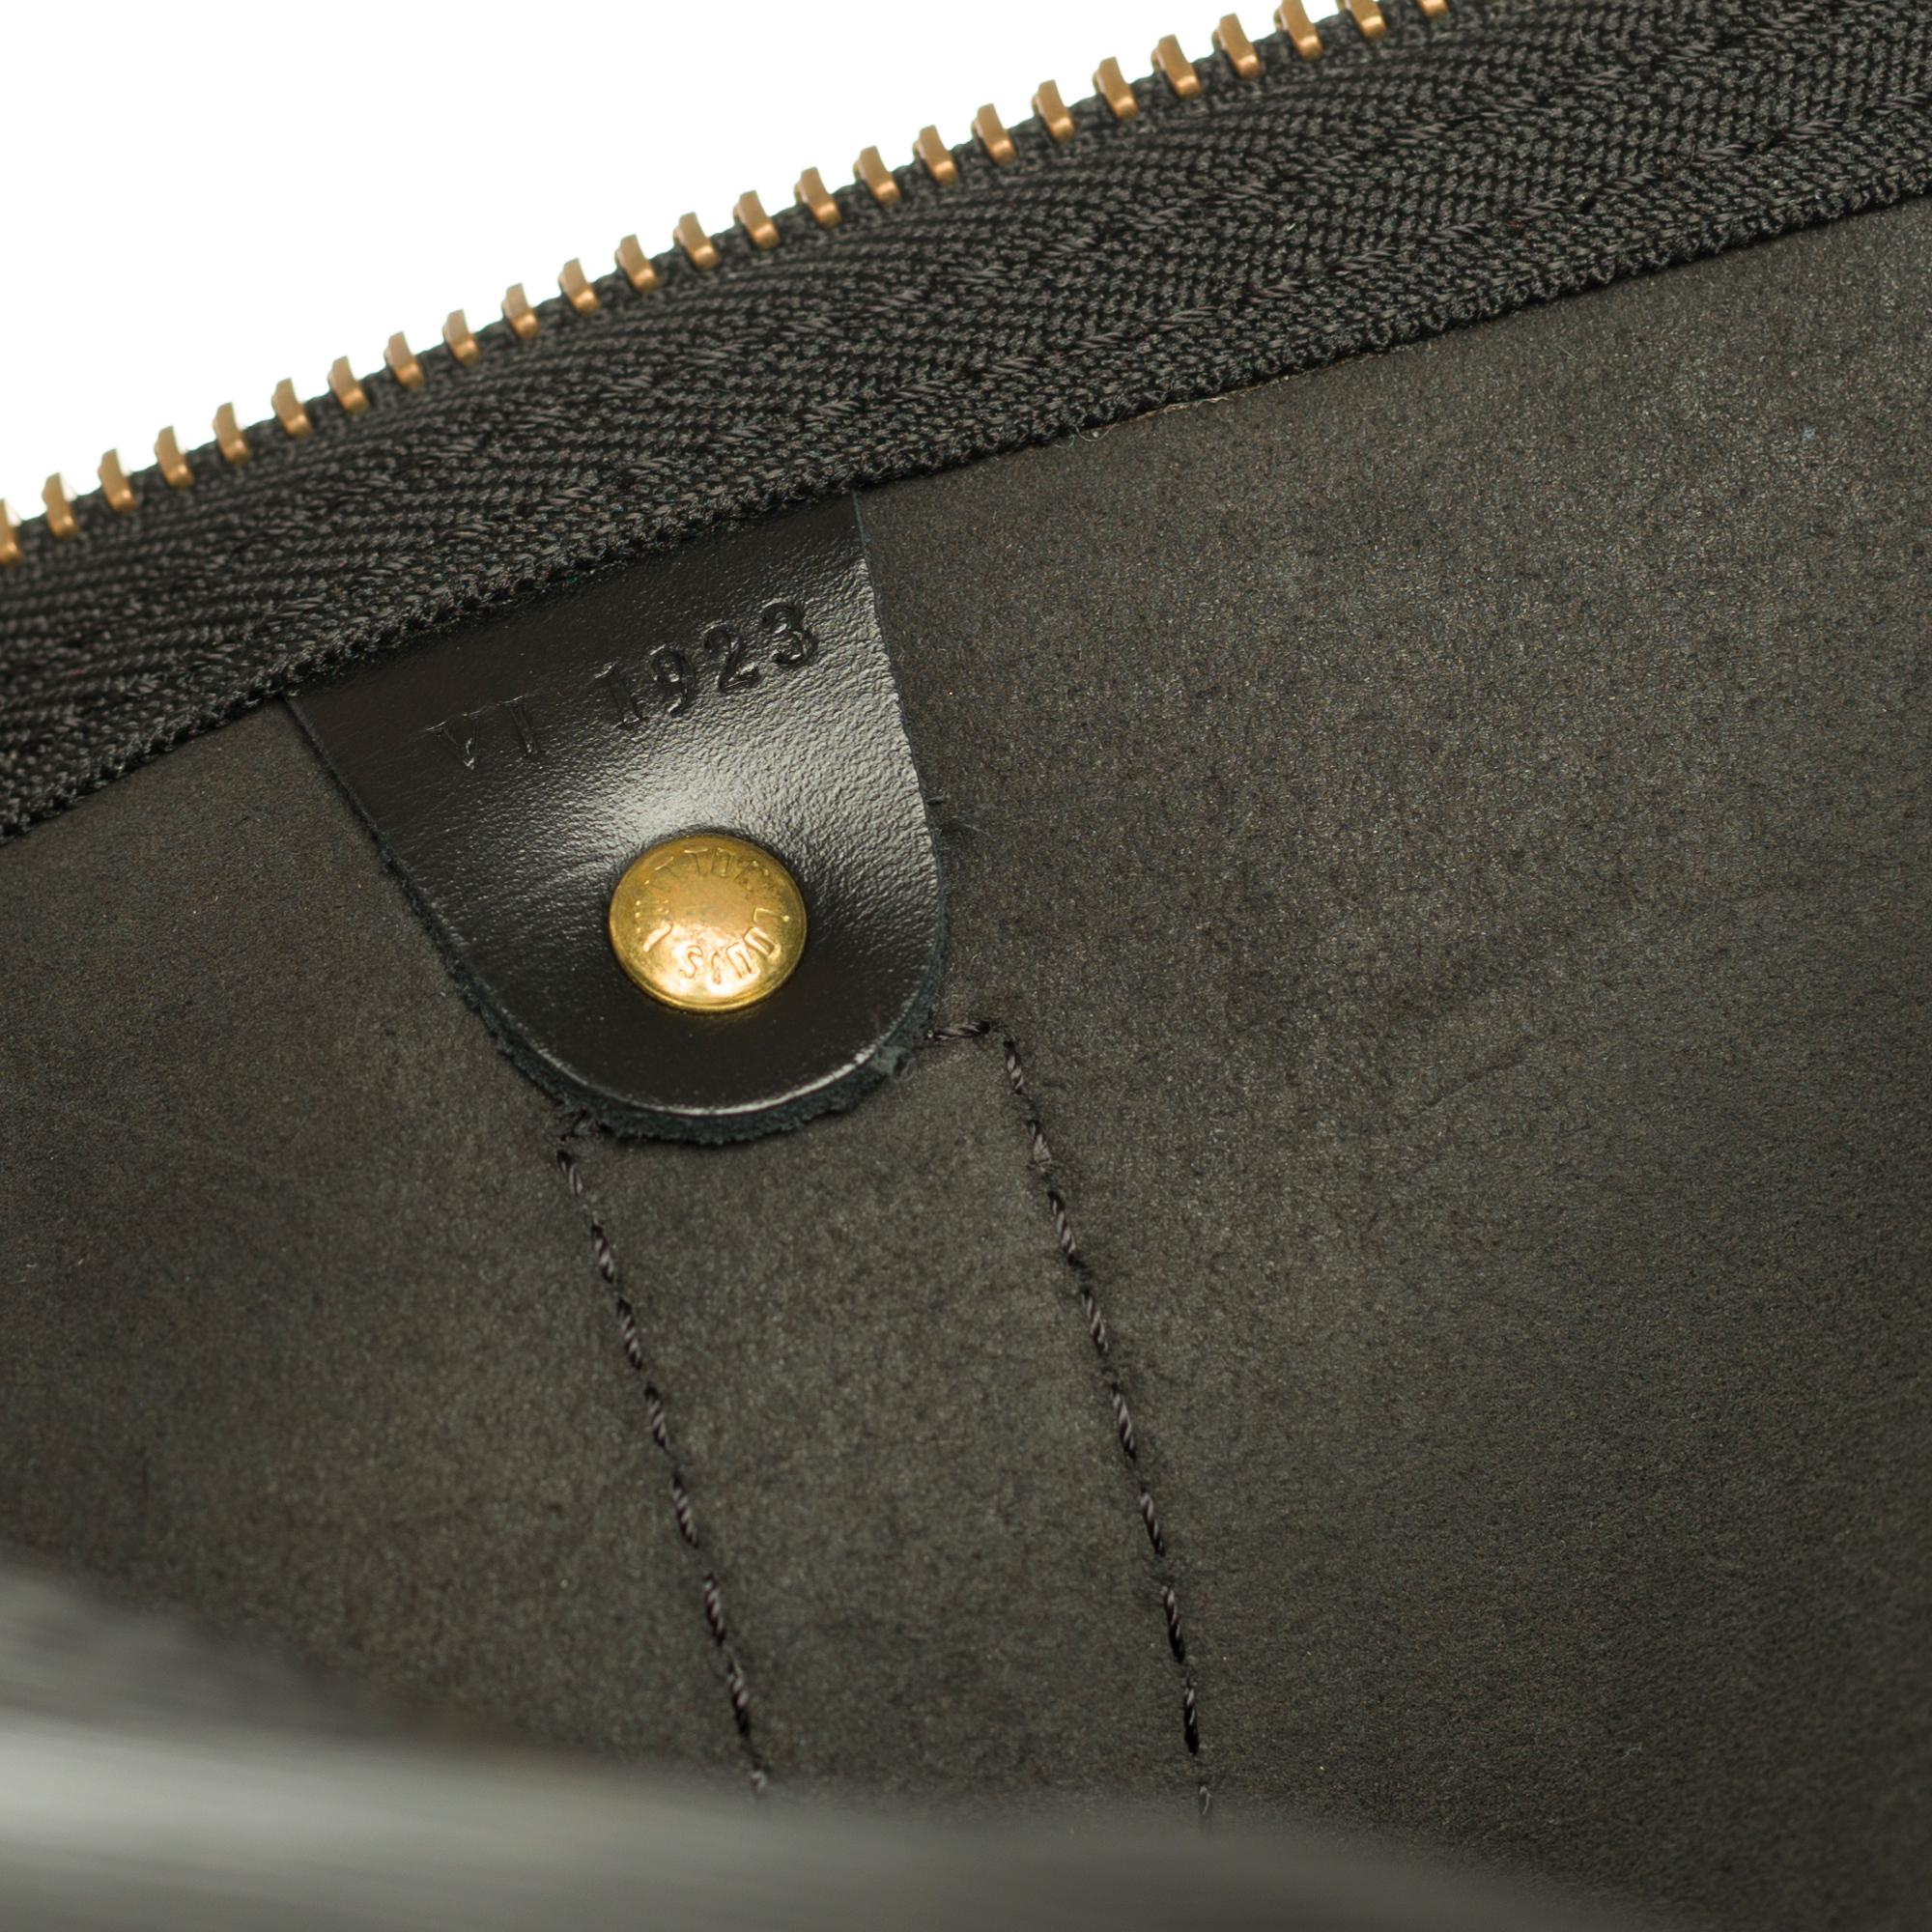 Louis Vuitton Keepall 50 Travel bag in black épi leather 2